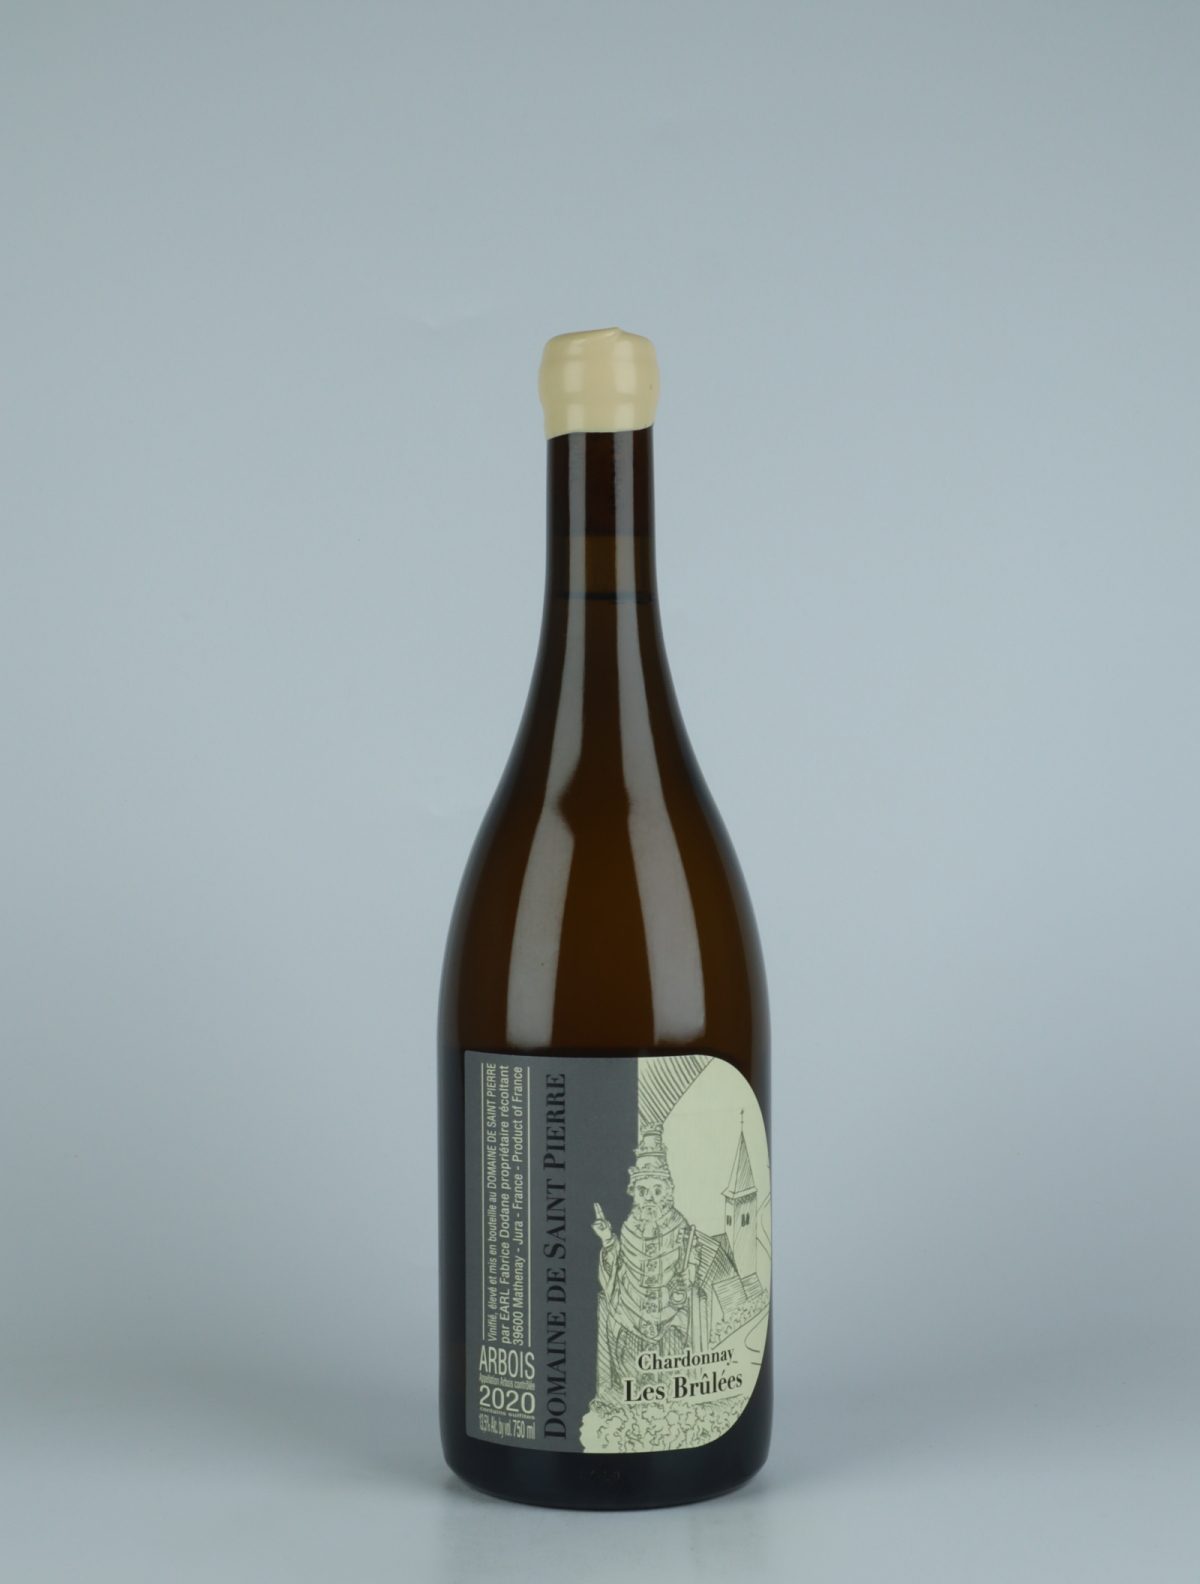 En flaske 2020 Arbois Blanc - Cuvée les Brulées Hvidvin fra Domaine de Saint Pierre, Jura i Frankrig